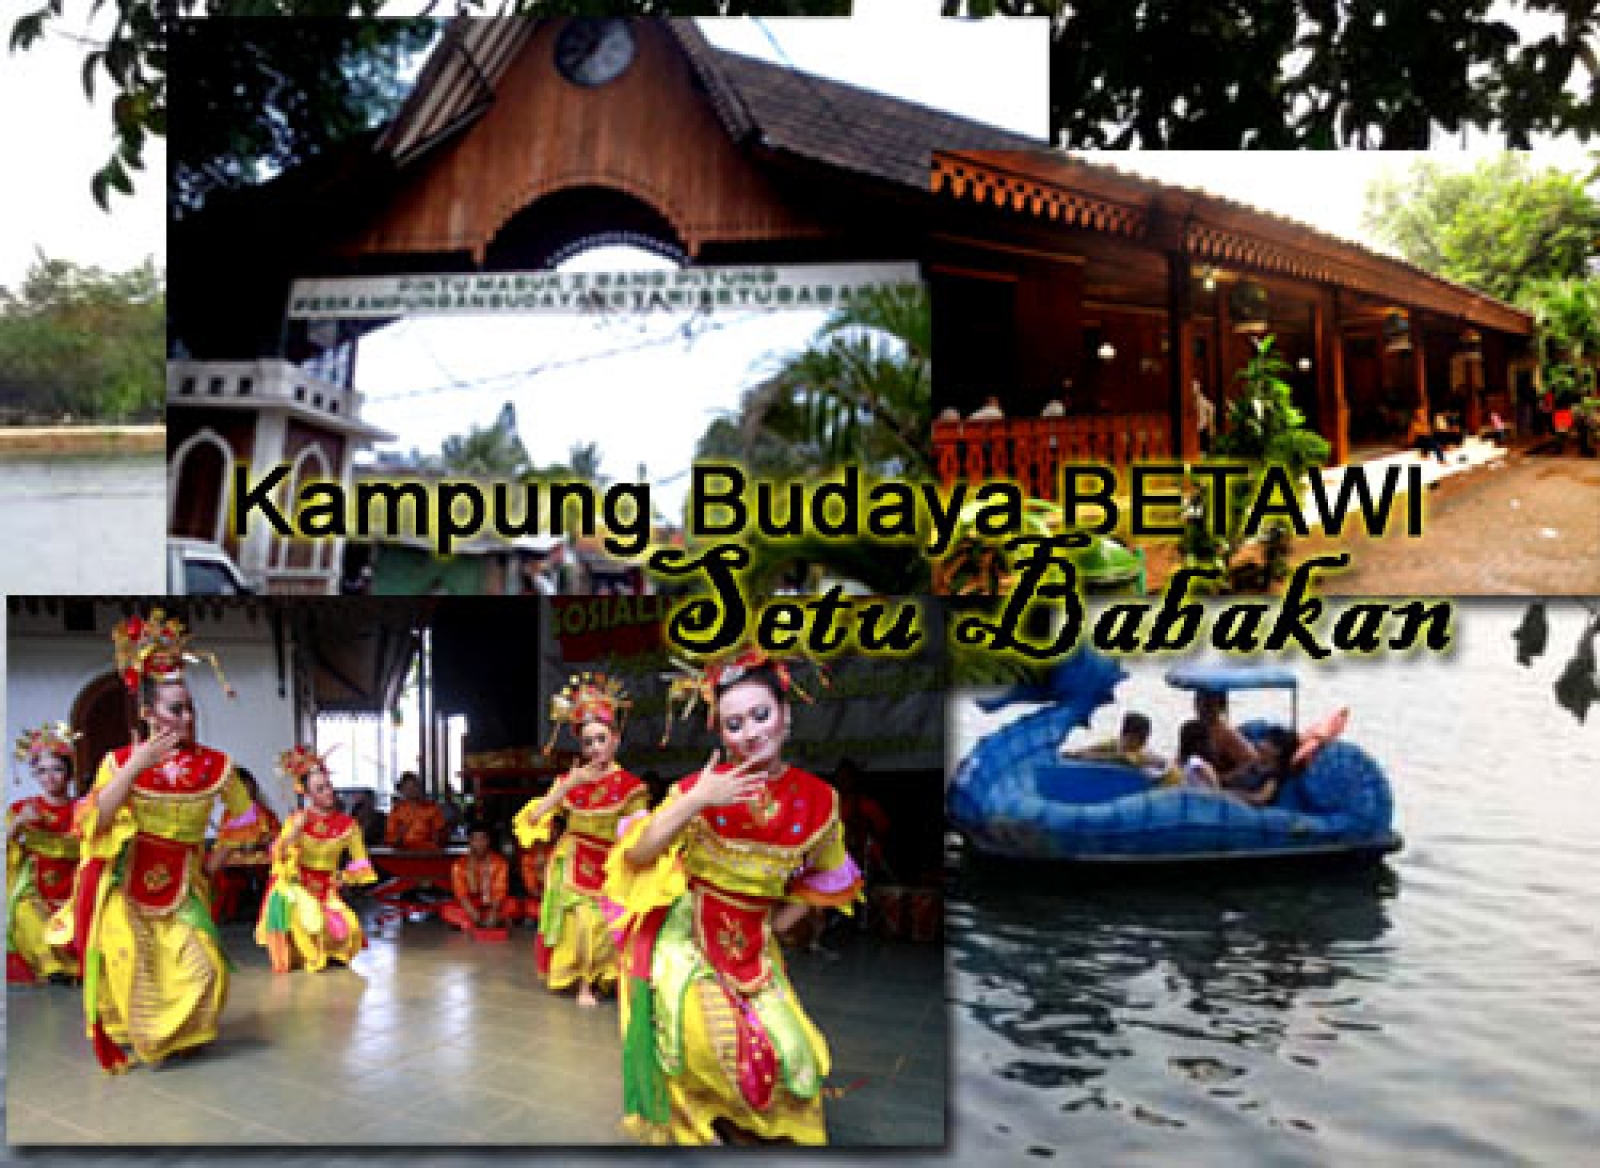 Berwisata Sembari Belajar! Ini 4 Wisata Budaya di Jakarta, Salahsatunya Ecopark